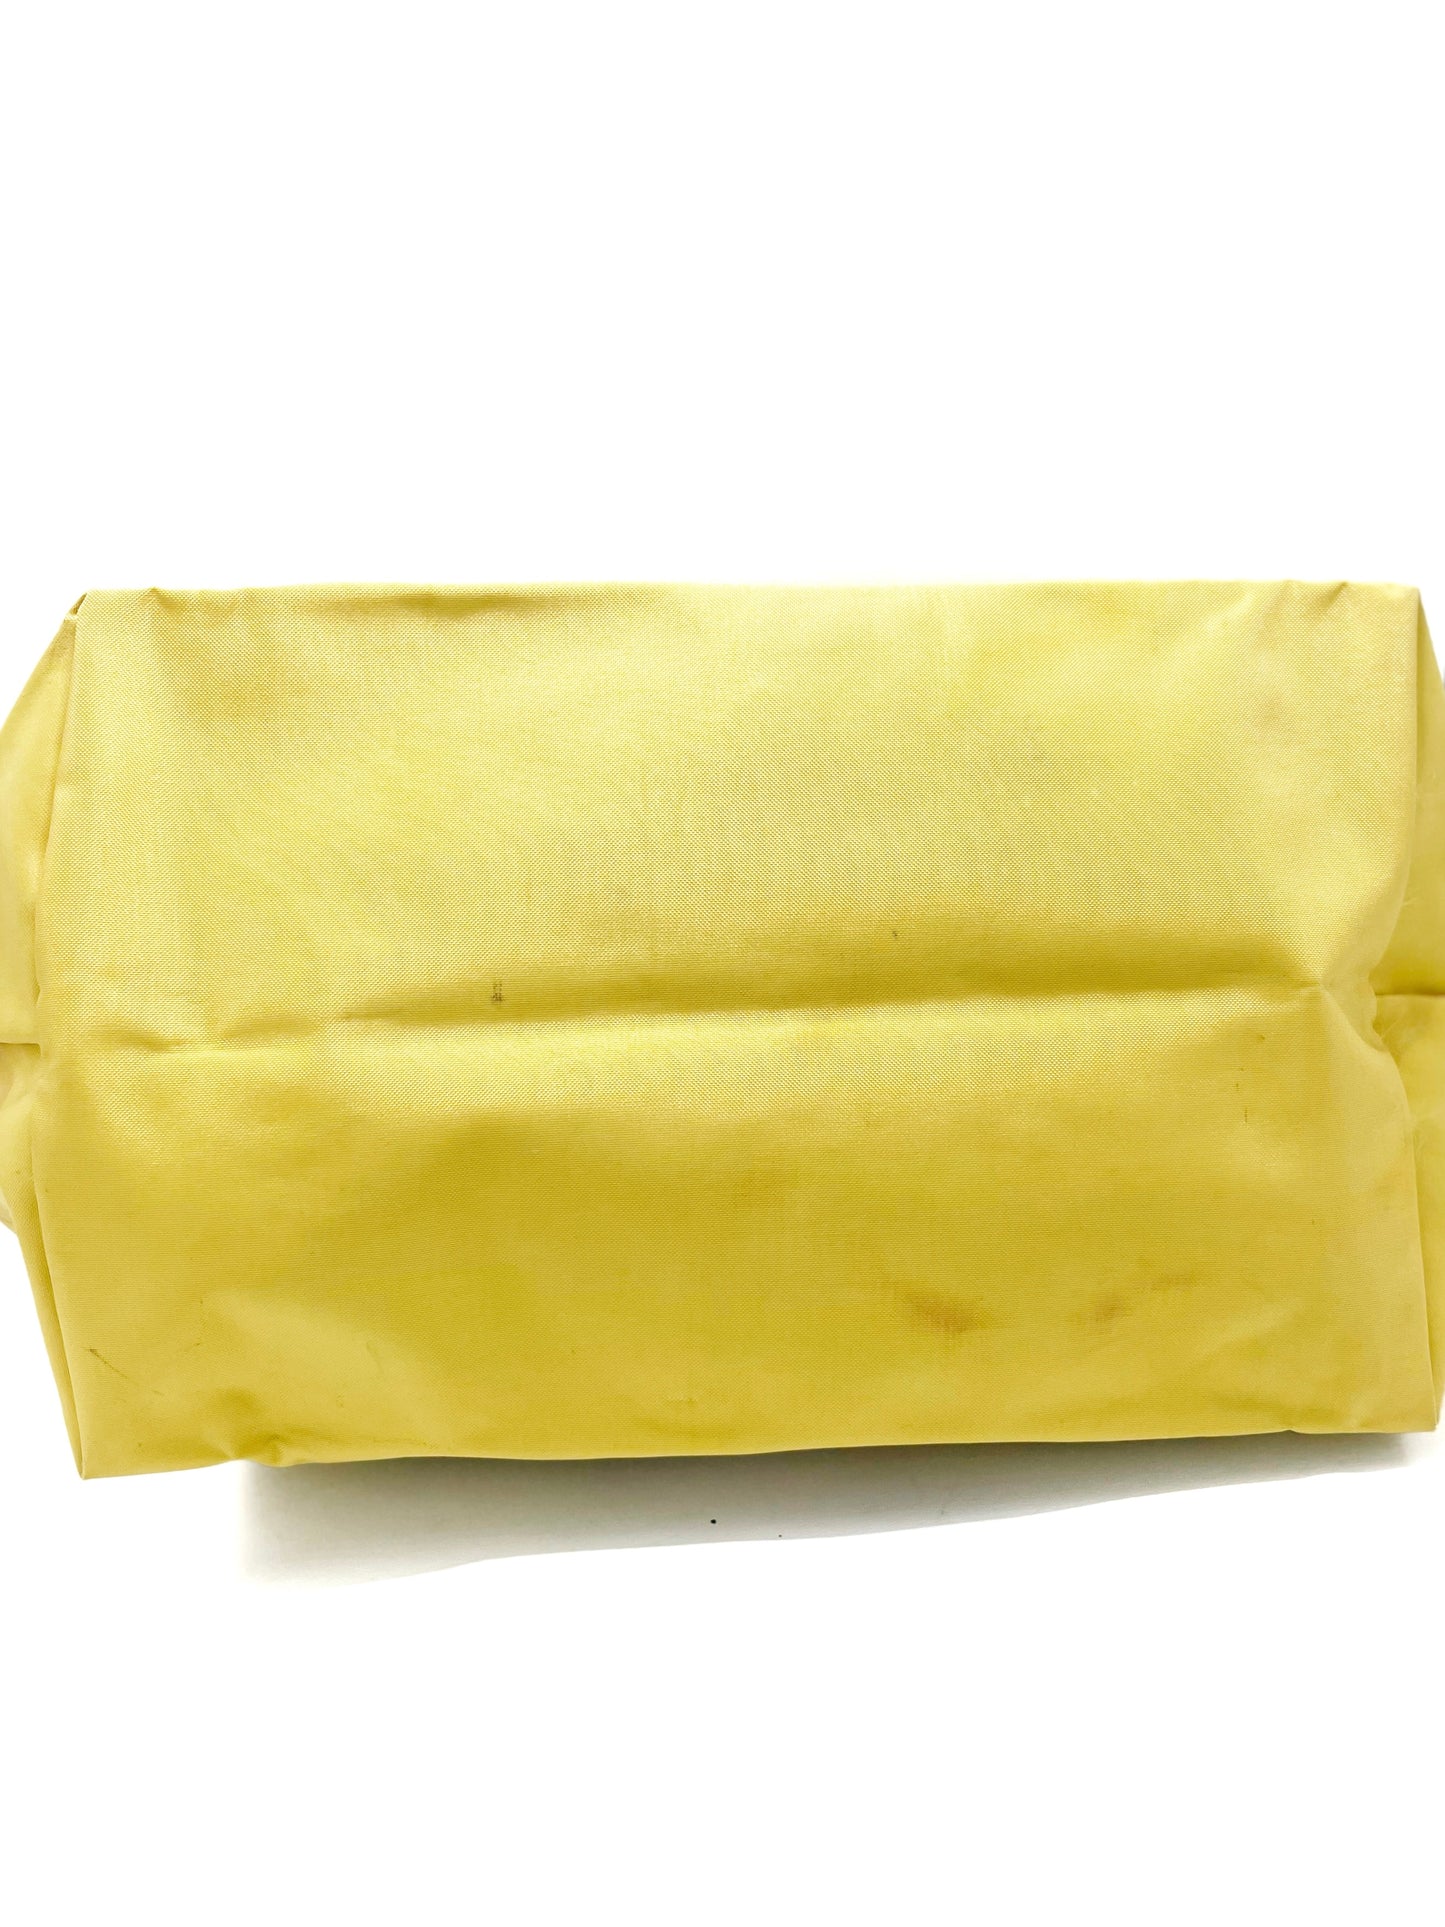 Cartera Longchamp Le Pliage M asa larga color amarillo